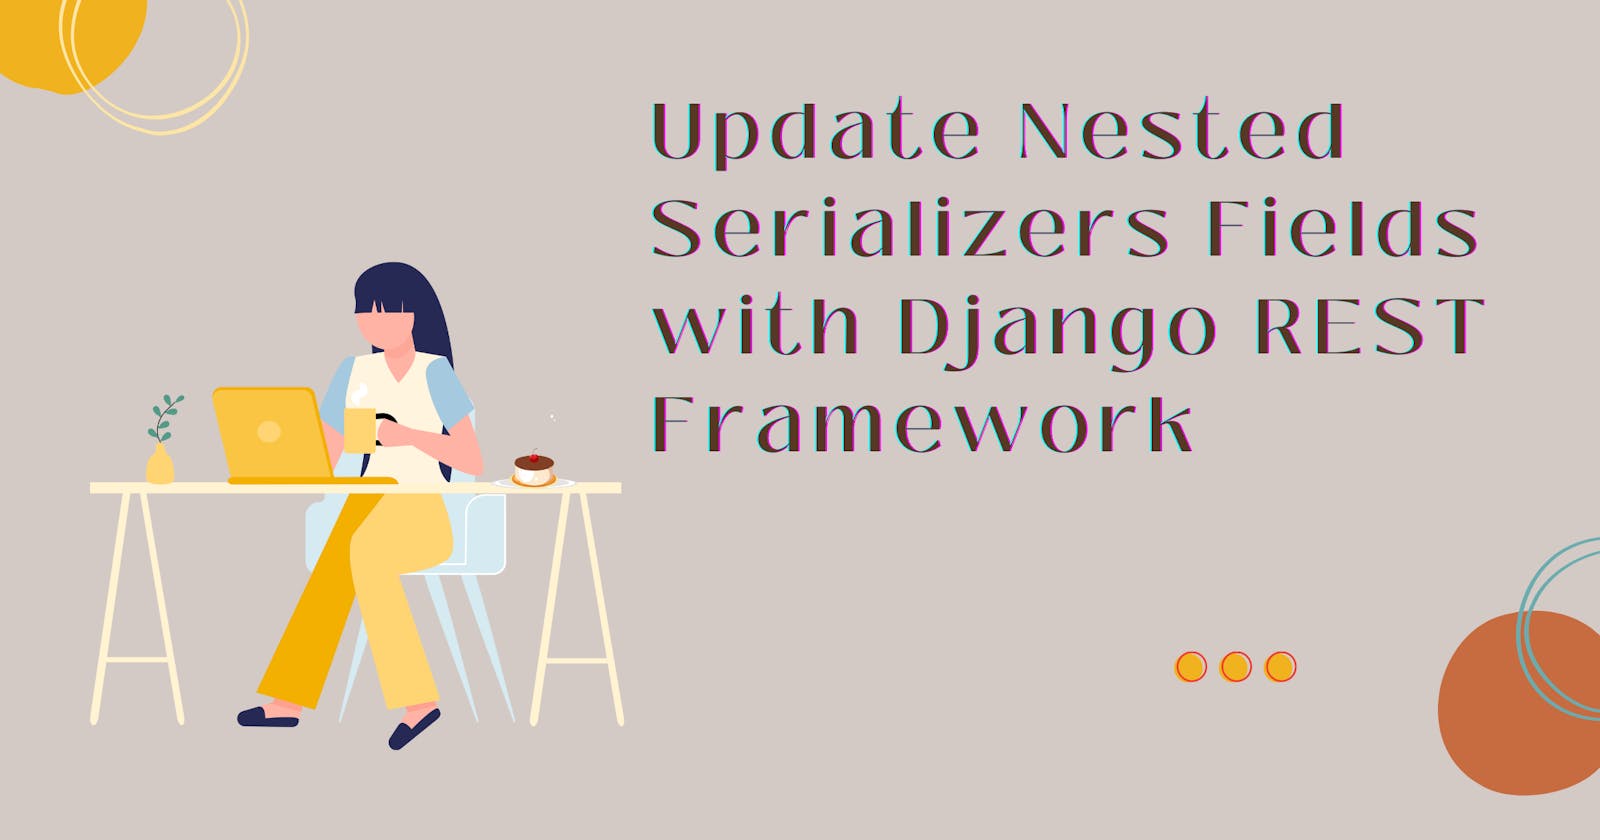 Update Nested Serializers Fields with Django REST Framework